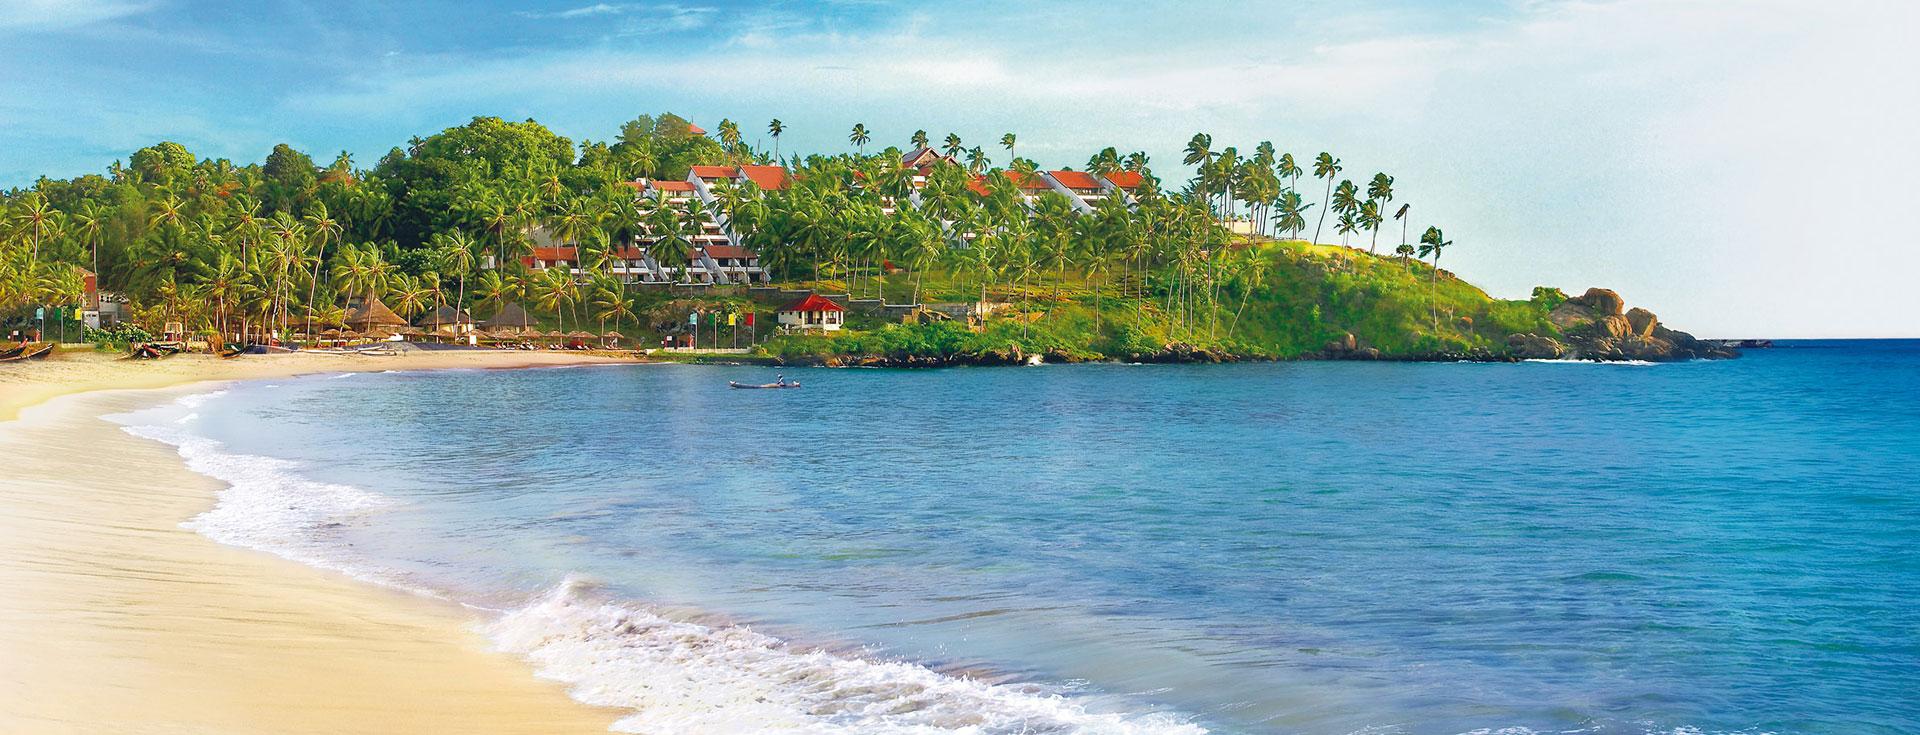 The Leela Kovalam, A Raviz Hotel - a romantic getaway beach resort